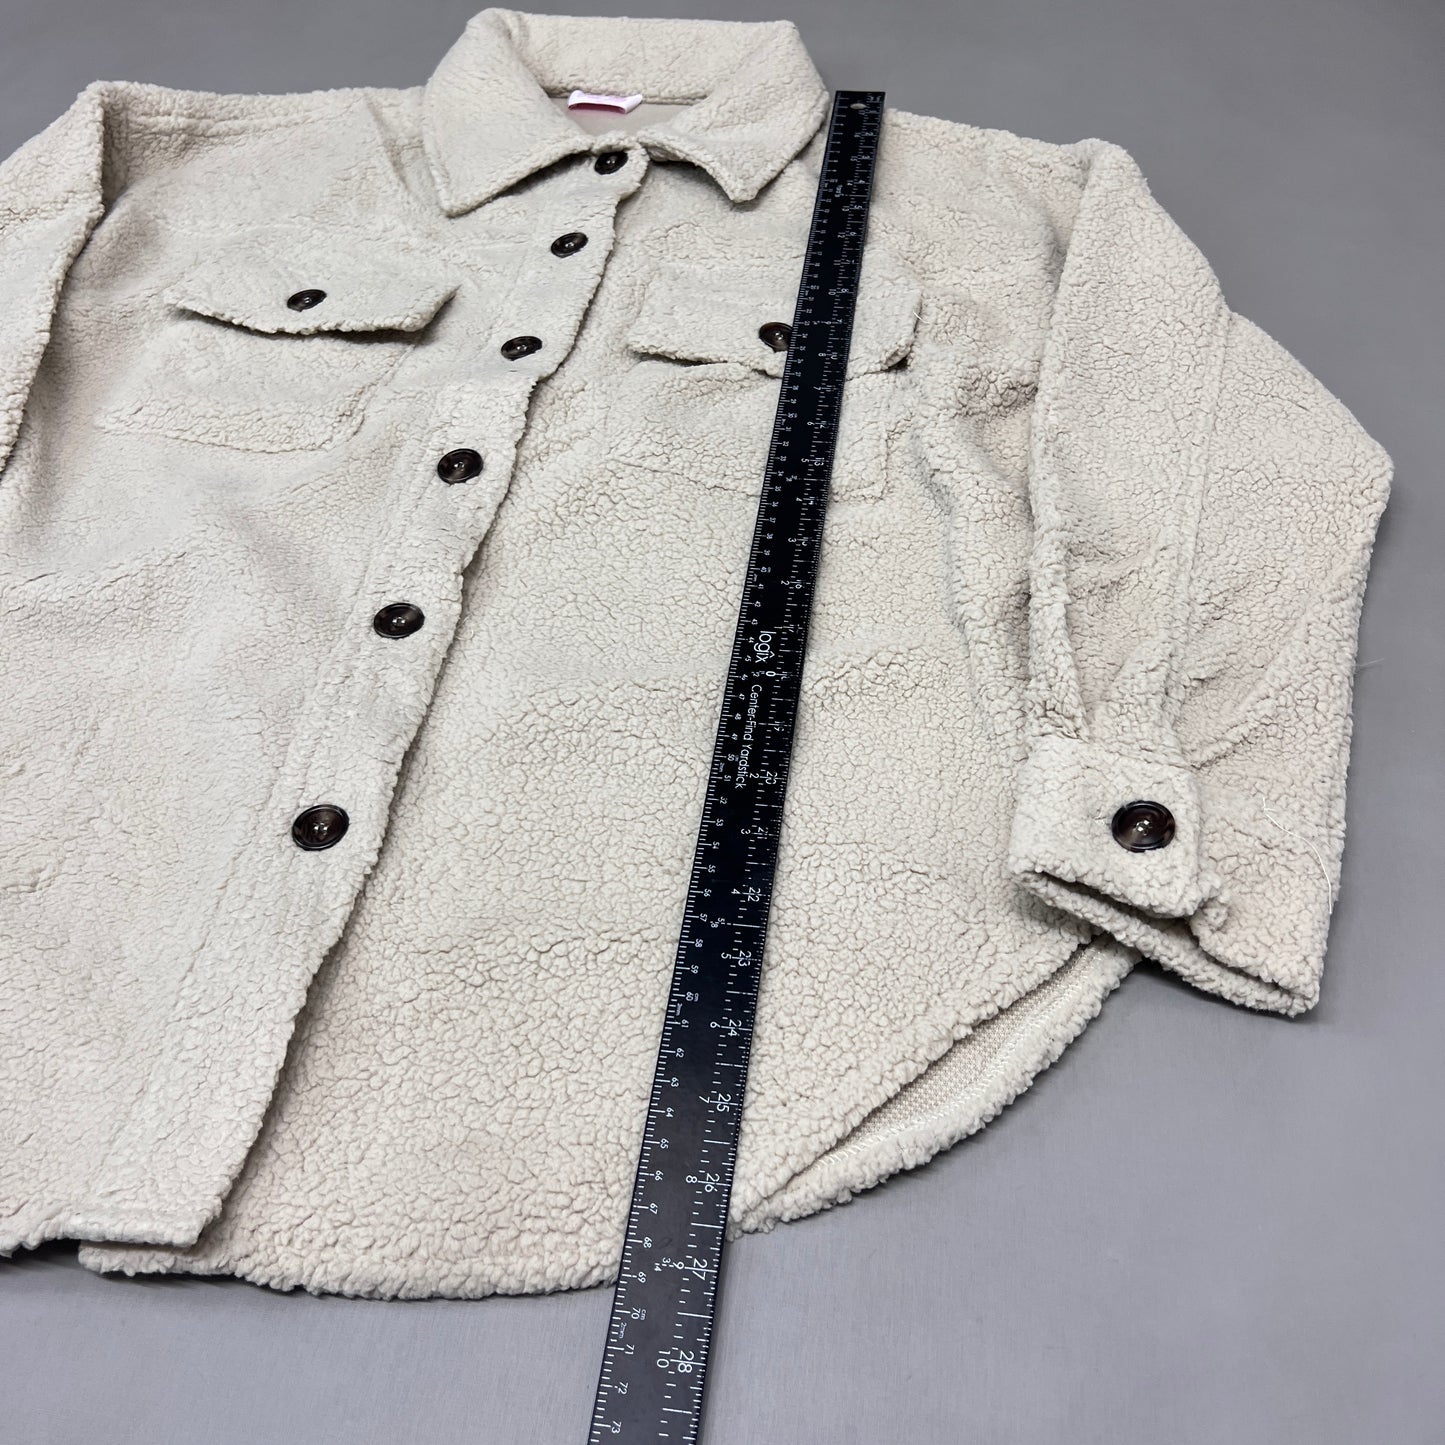 PINK LILY Fleece Button-up Jacket Women's Sz S Beige PL177 (New)